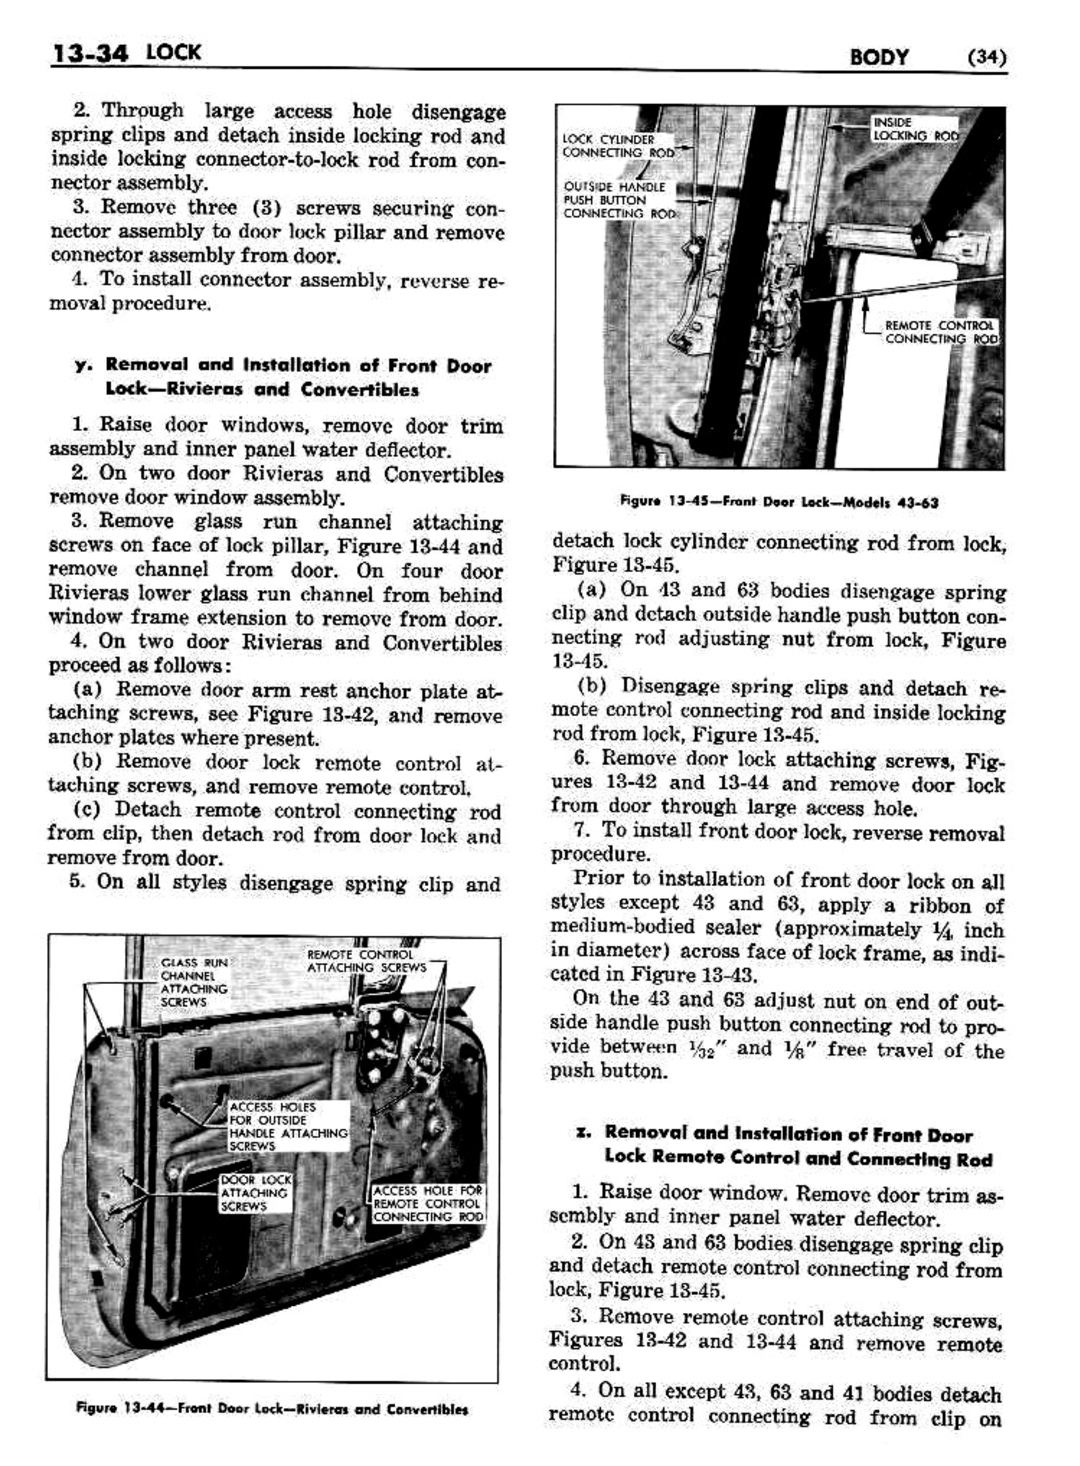 n_1958 Buick Body Service Manual-035-035.jpg